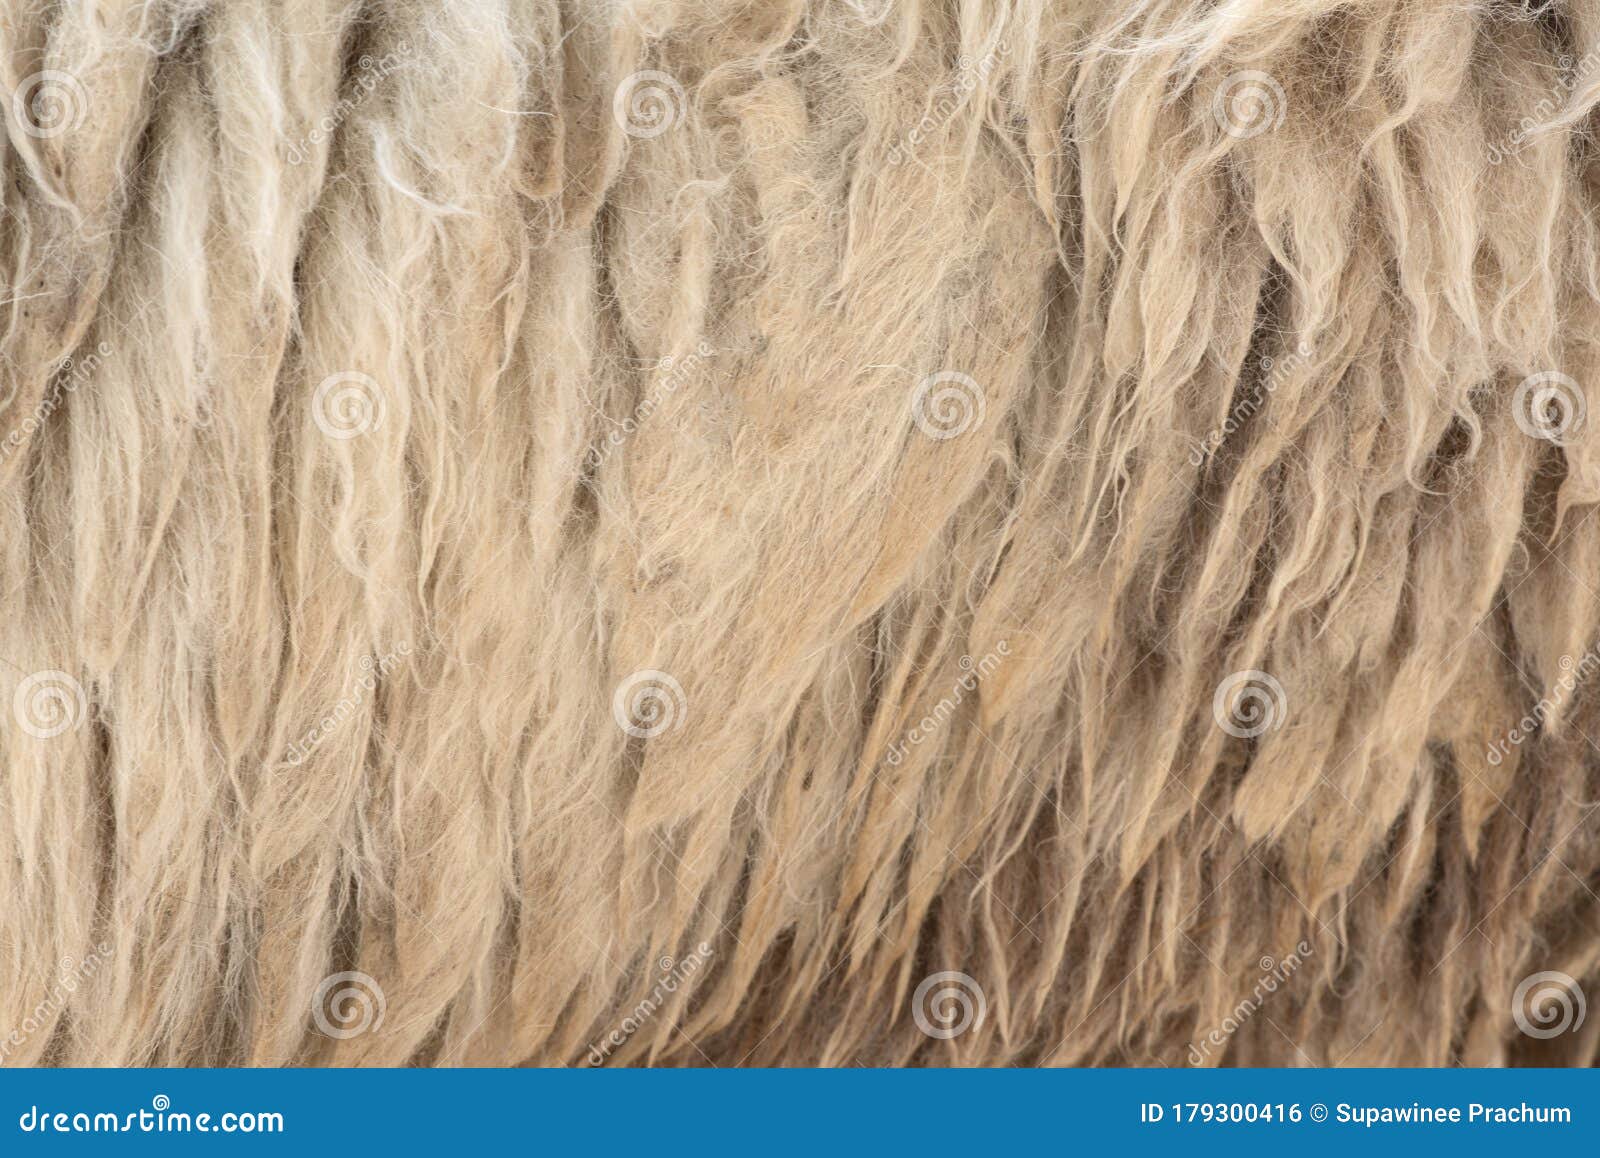 fleece white,close up of fleece, exture background